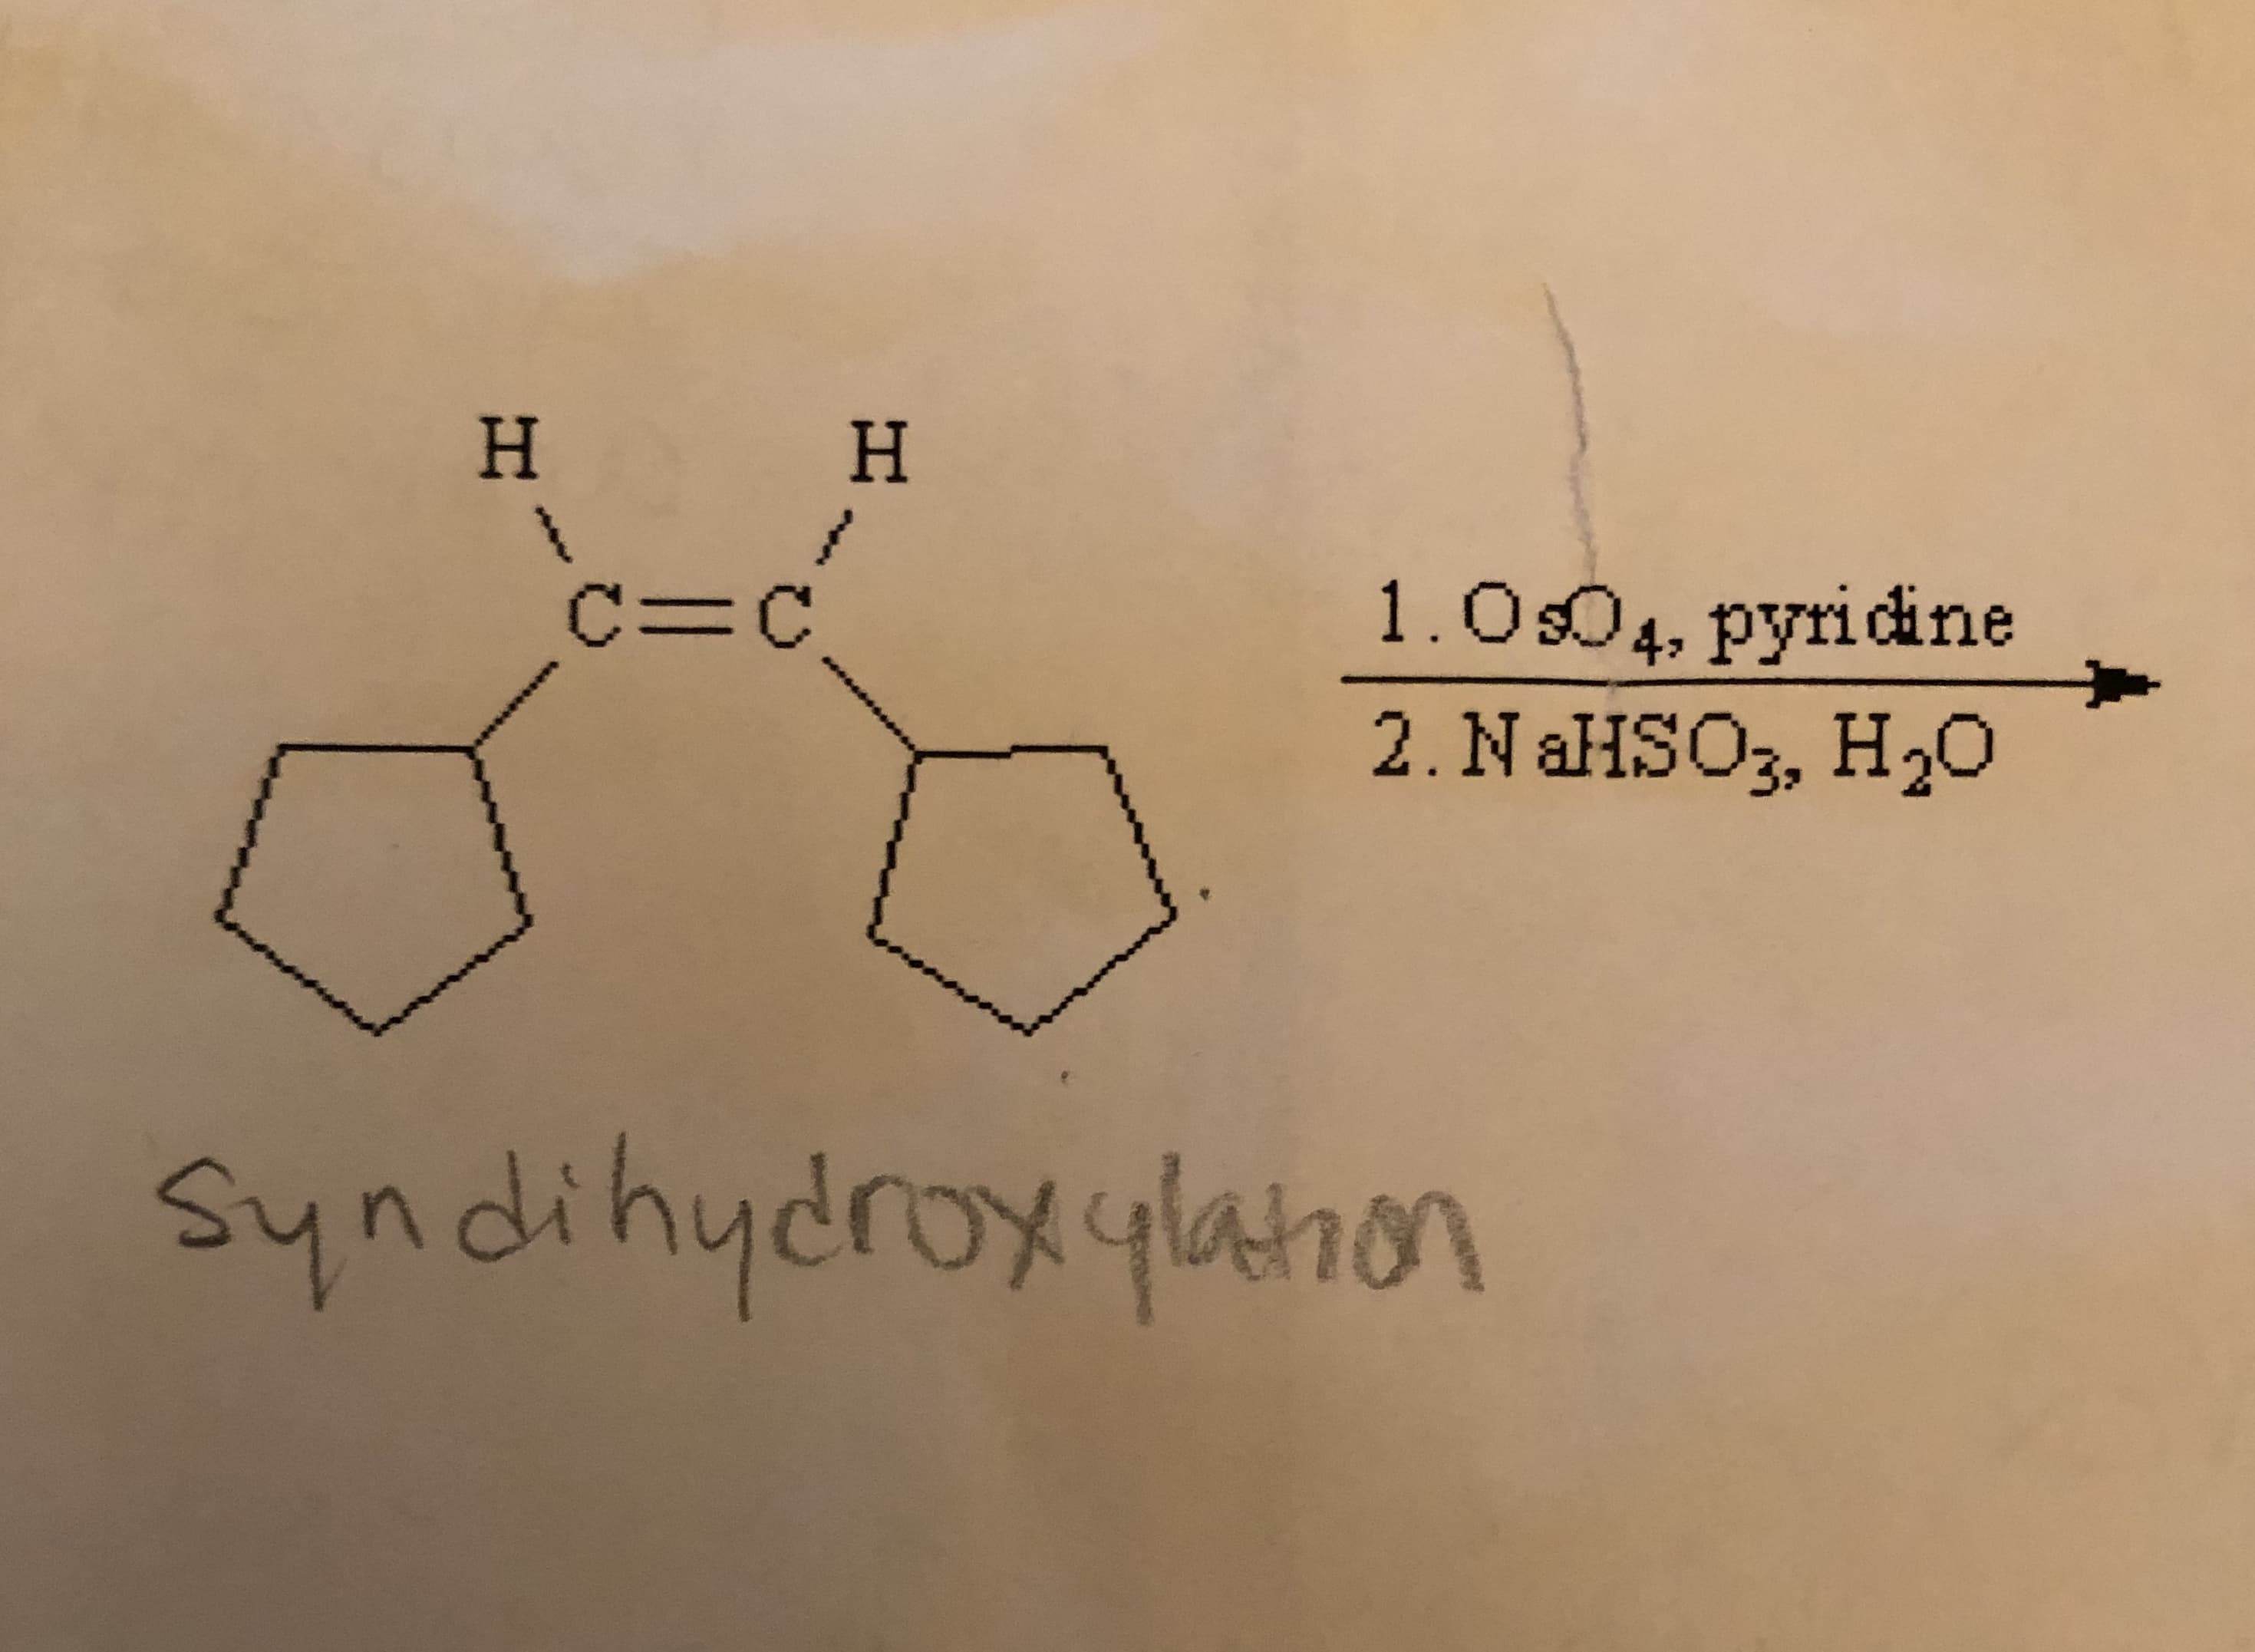 1.0304, pyridine
2. N aHSO3, H20
с с
sundihydroyqnon
